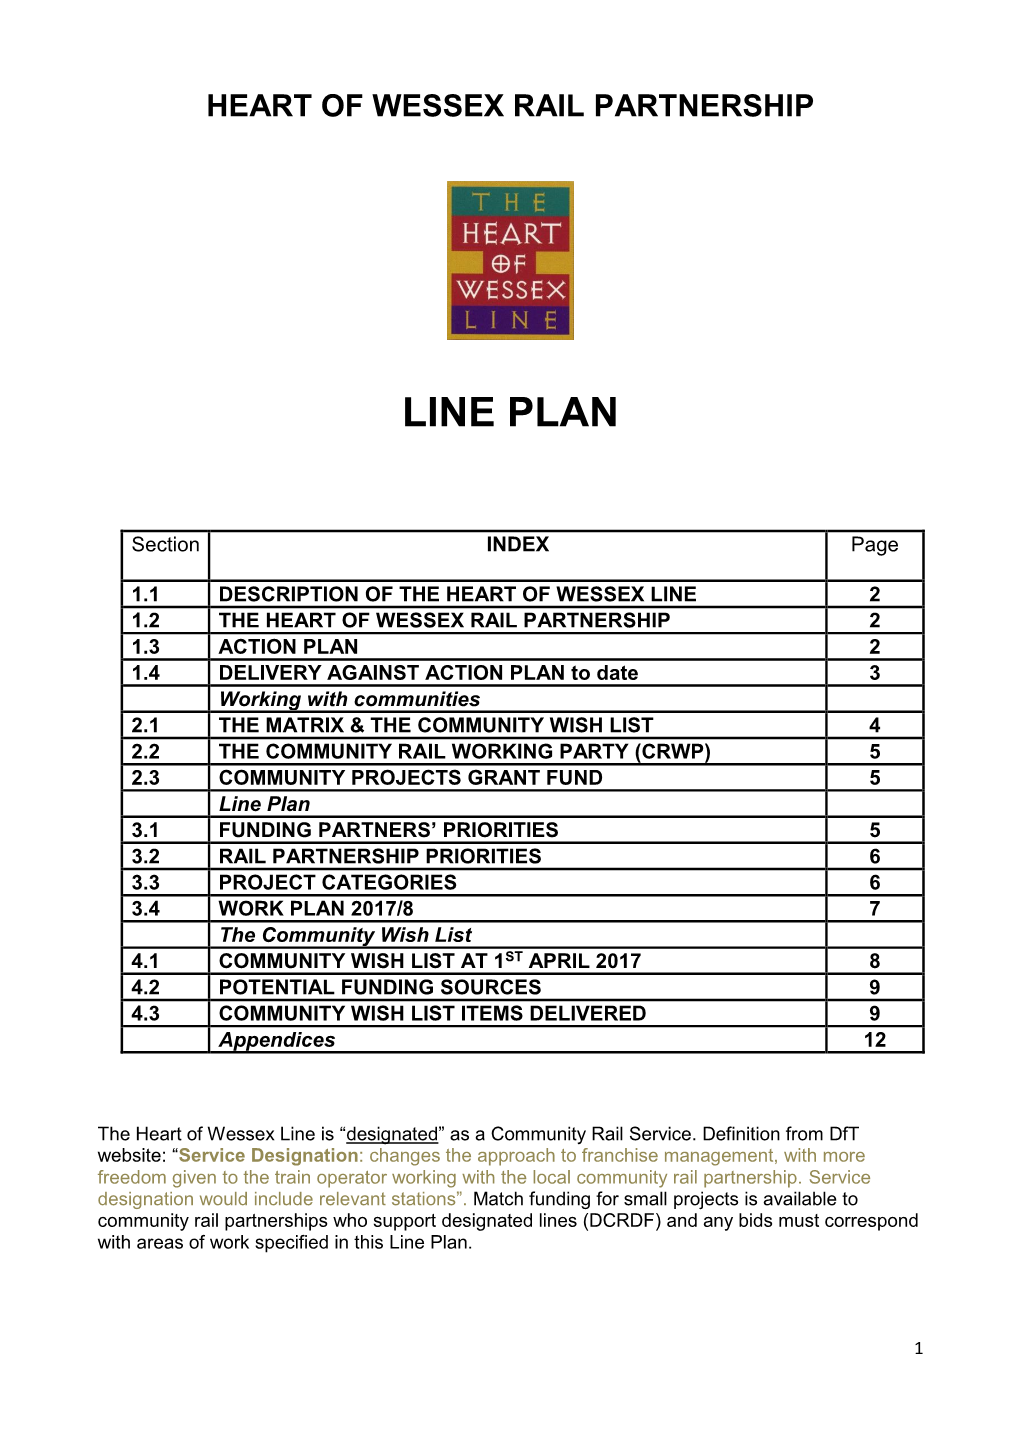 Heart of Wessex Rail Partnership Line Plan